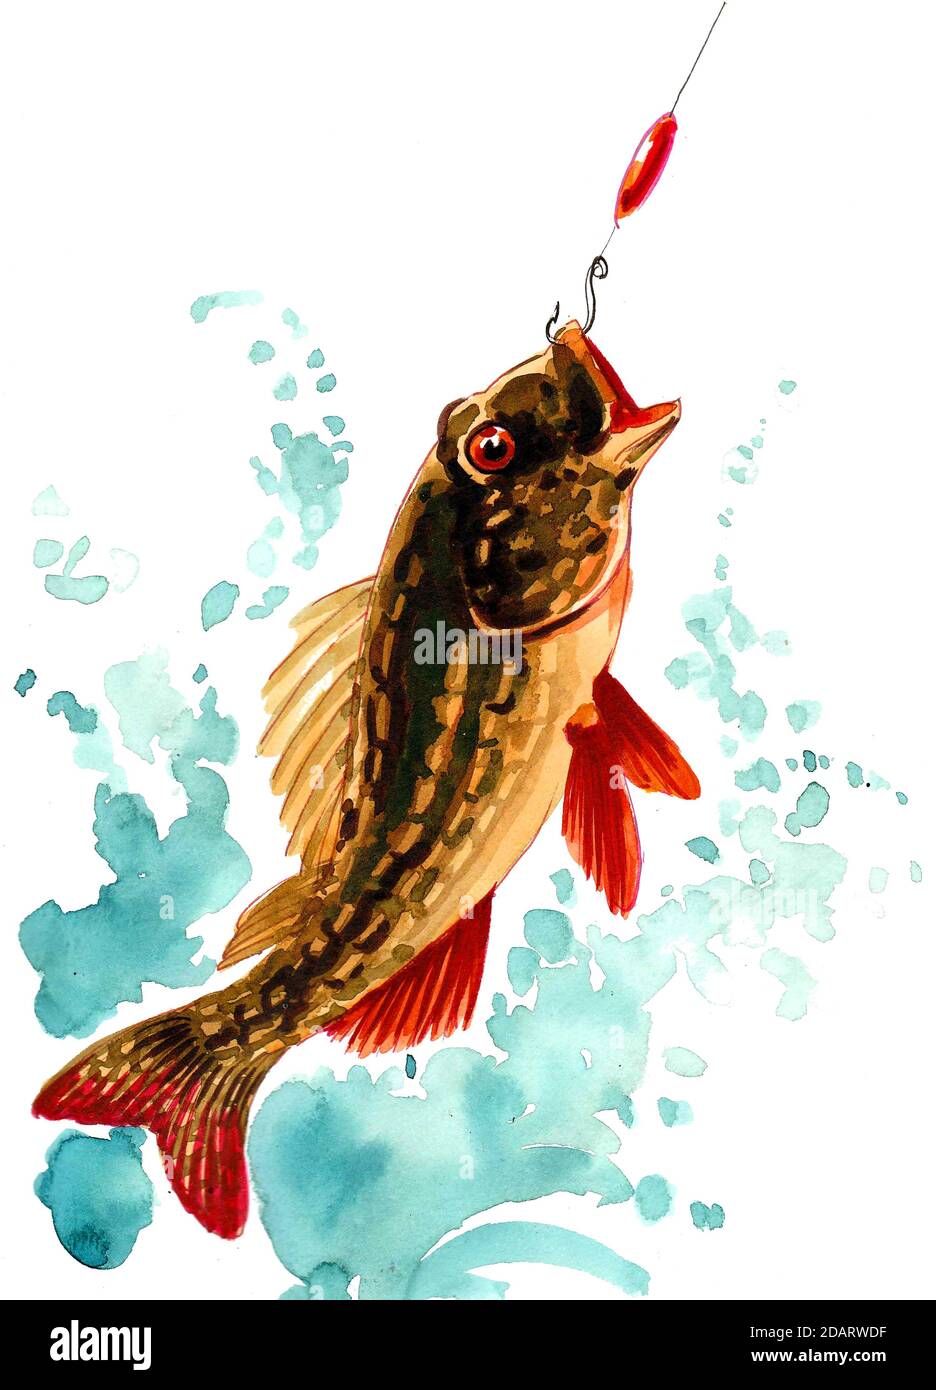 https://c8.alamy.com/comp/2DARWDF/fish-biting-fishing-hook-ink-and-watercolor-drawing-2DARWDF.jpg